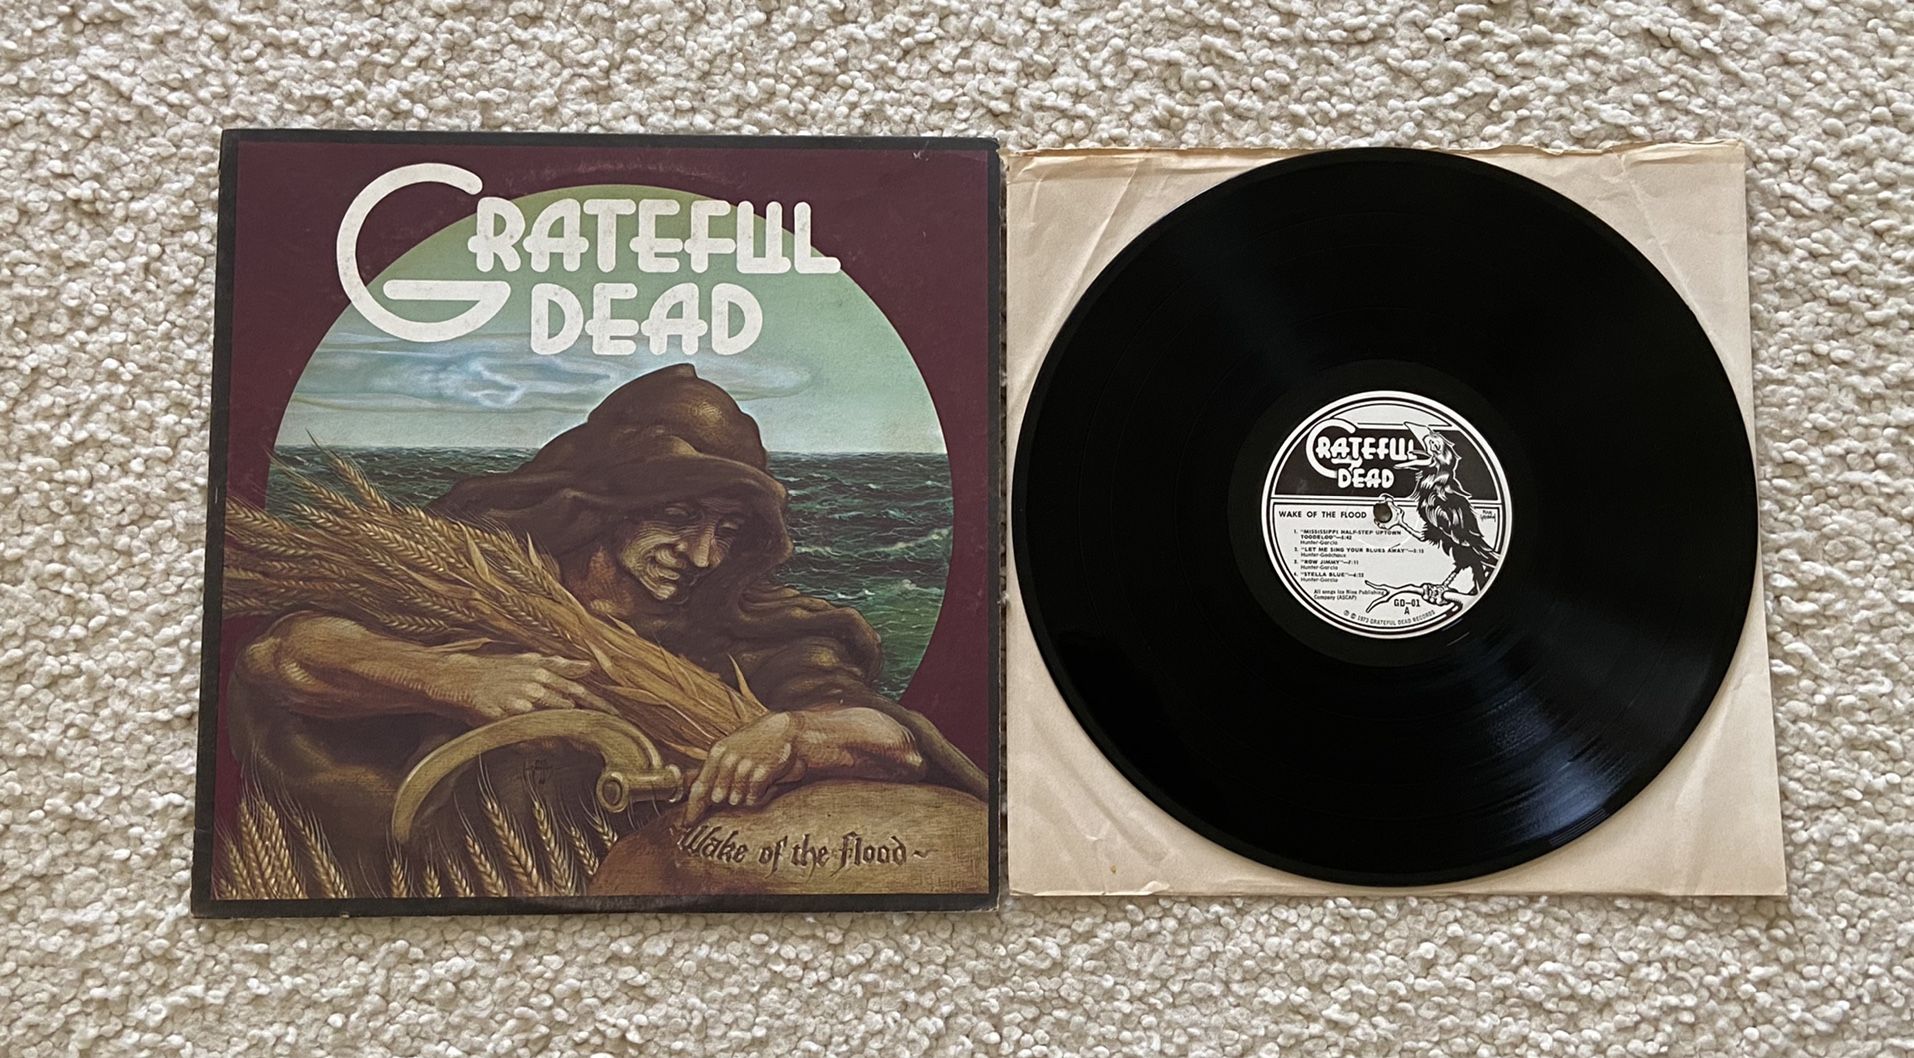 The Grateful Dead “Wake Of The Flood” Vinyl Lp 1973 Grateful Dead Records Original Pressing Collector’s Copy Rock 